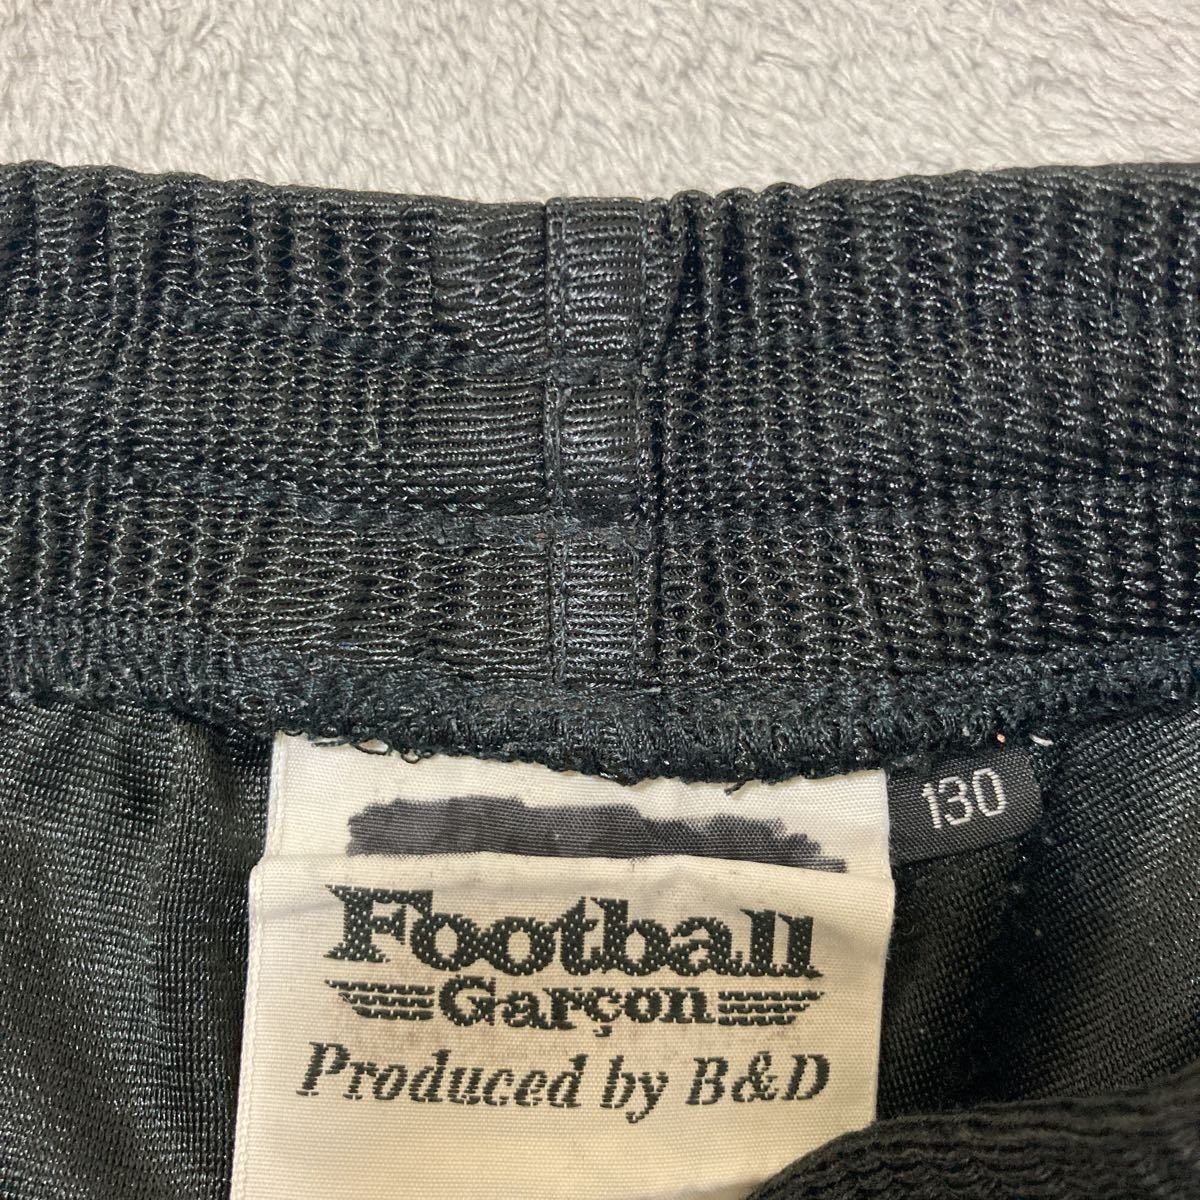  Kids мужчина футбол одежда 130 рубашка с коротким рукавом шорты верх и низ в комплекте spazio blue black футбол одежда спорт одежда 